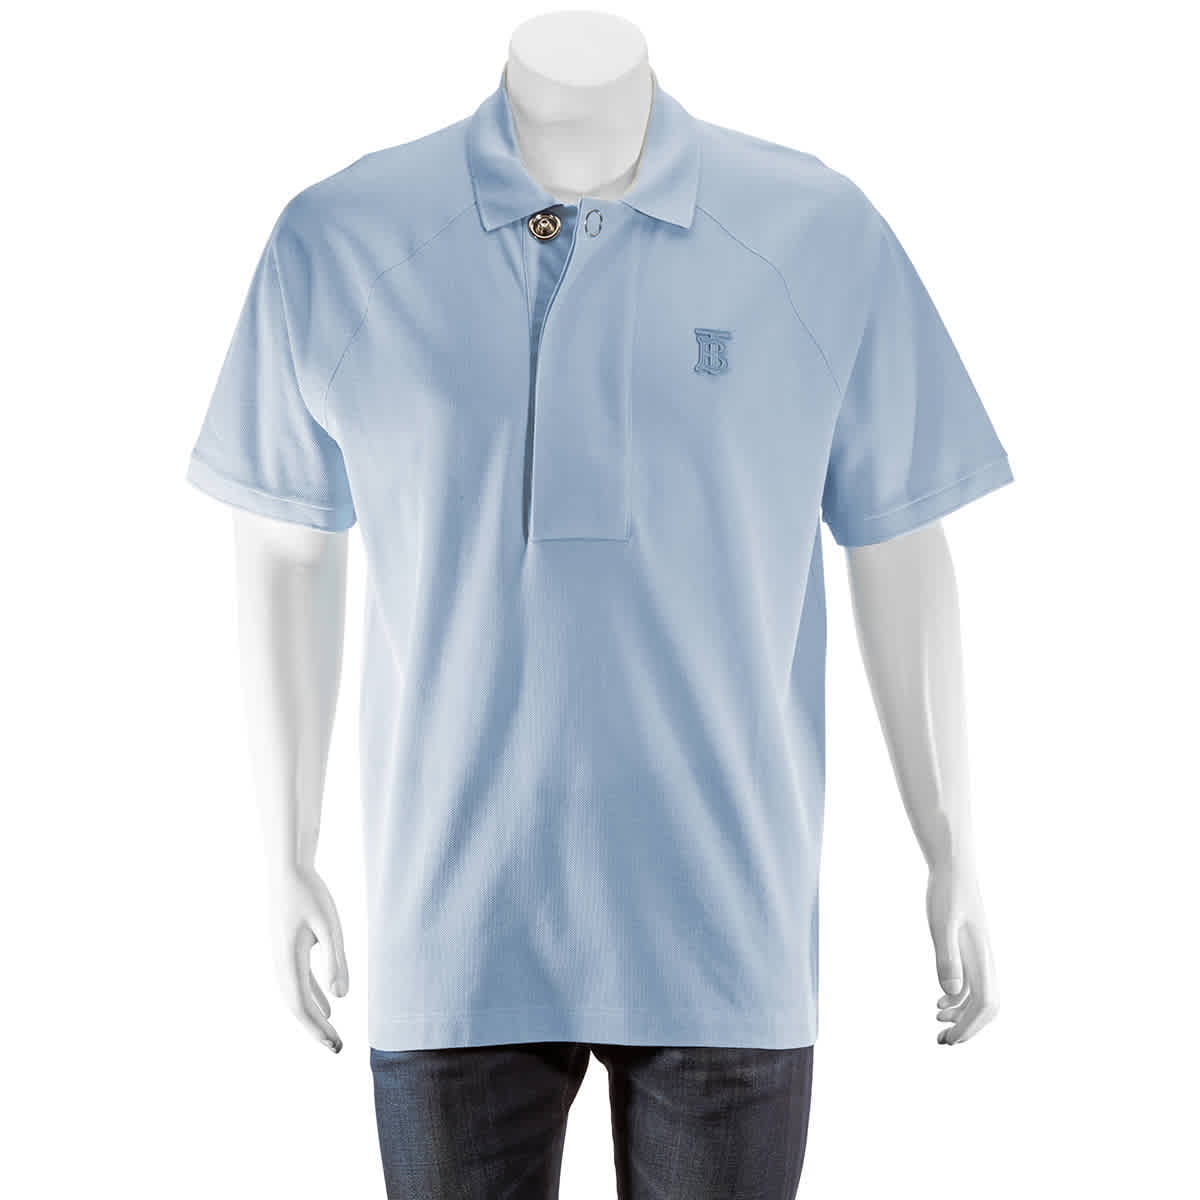 Burberry Monogram Motif Cotton Pique Polo Shirt, Brand Size Small -  